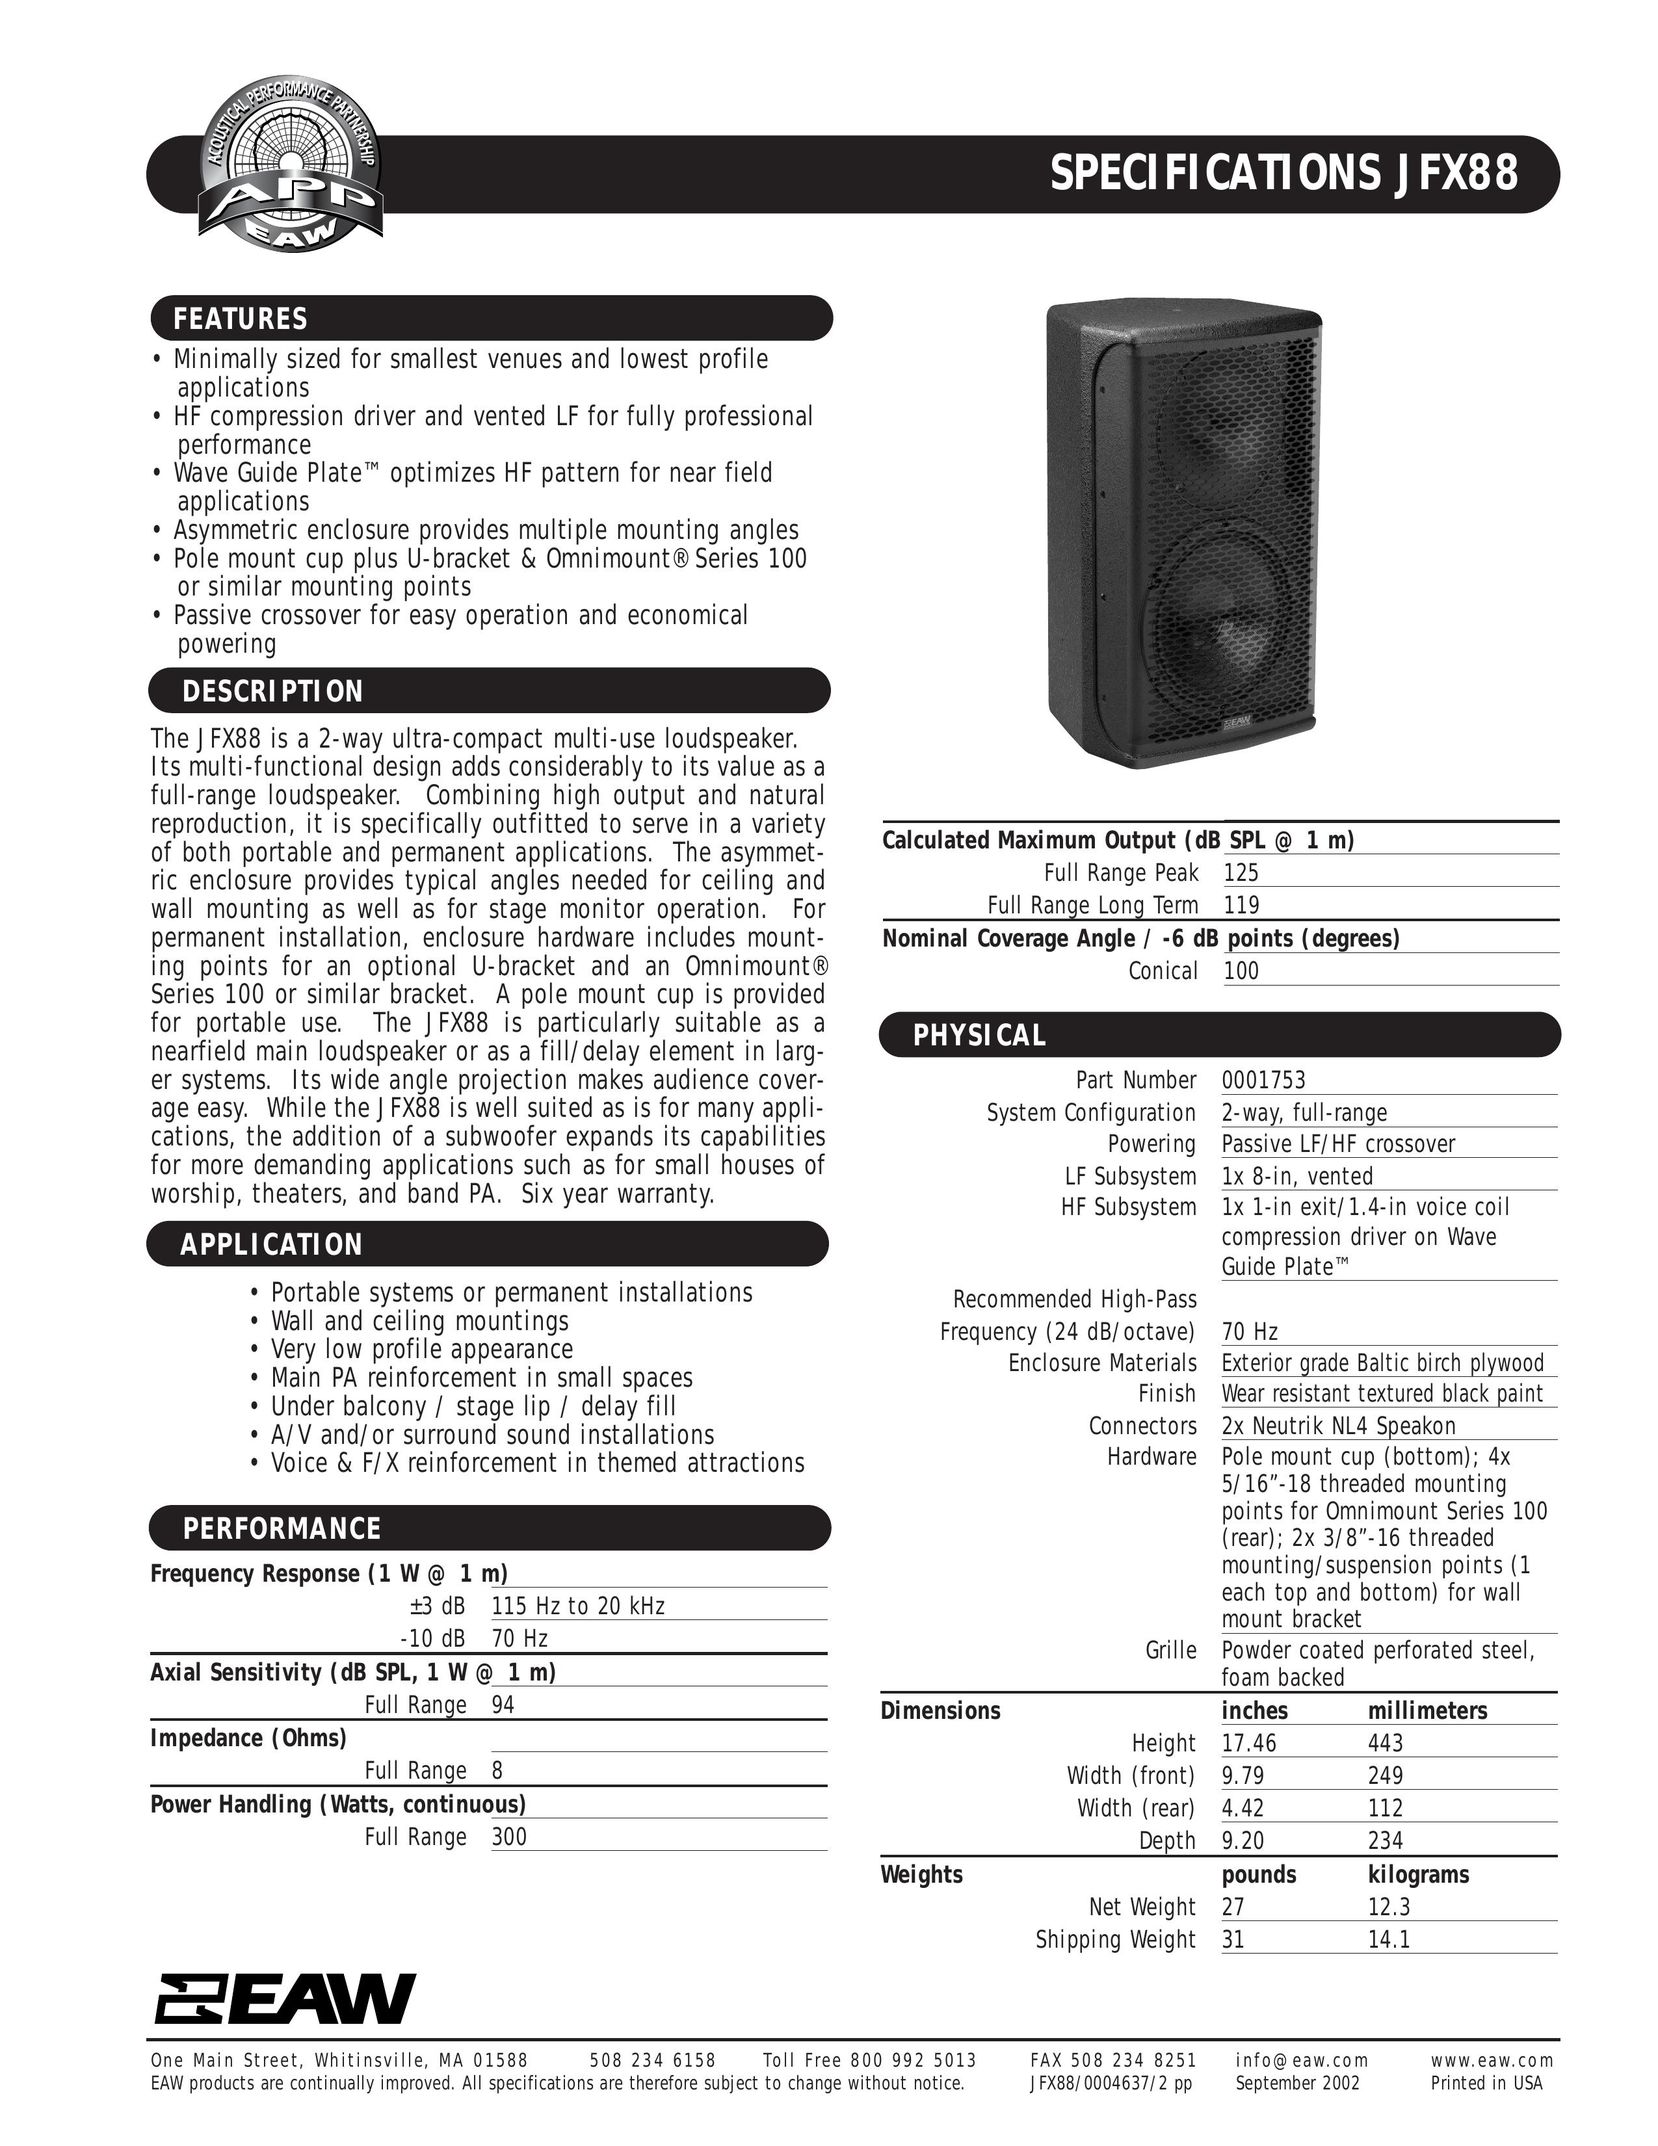 EAW JFX88 Portable Speaker User Manual